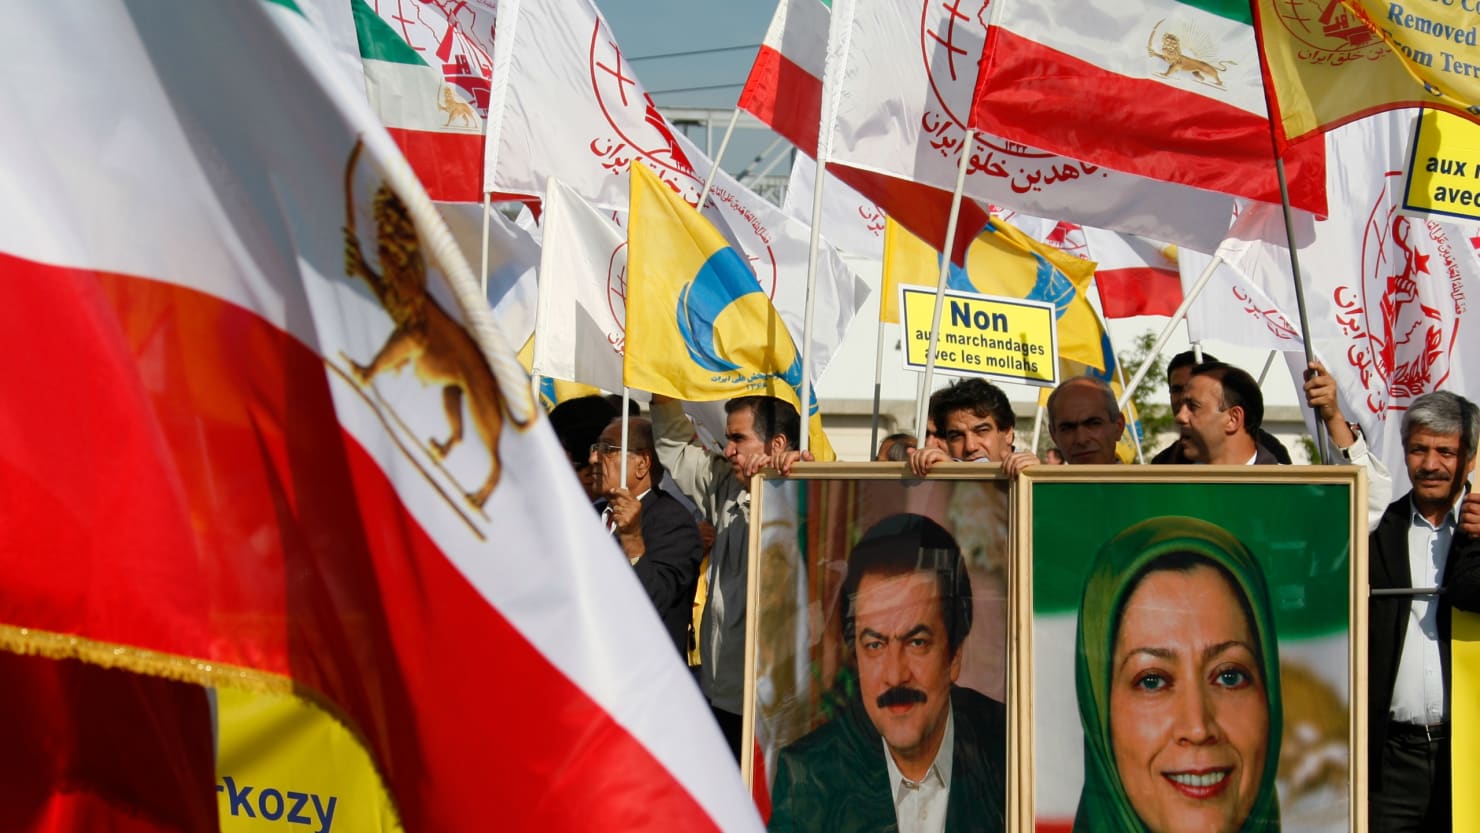 Why is MEK Group So Unpopular Among Iranians?